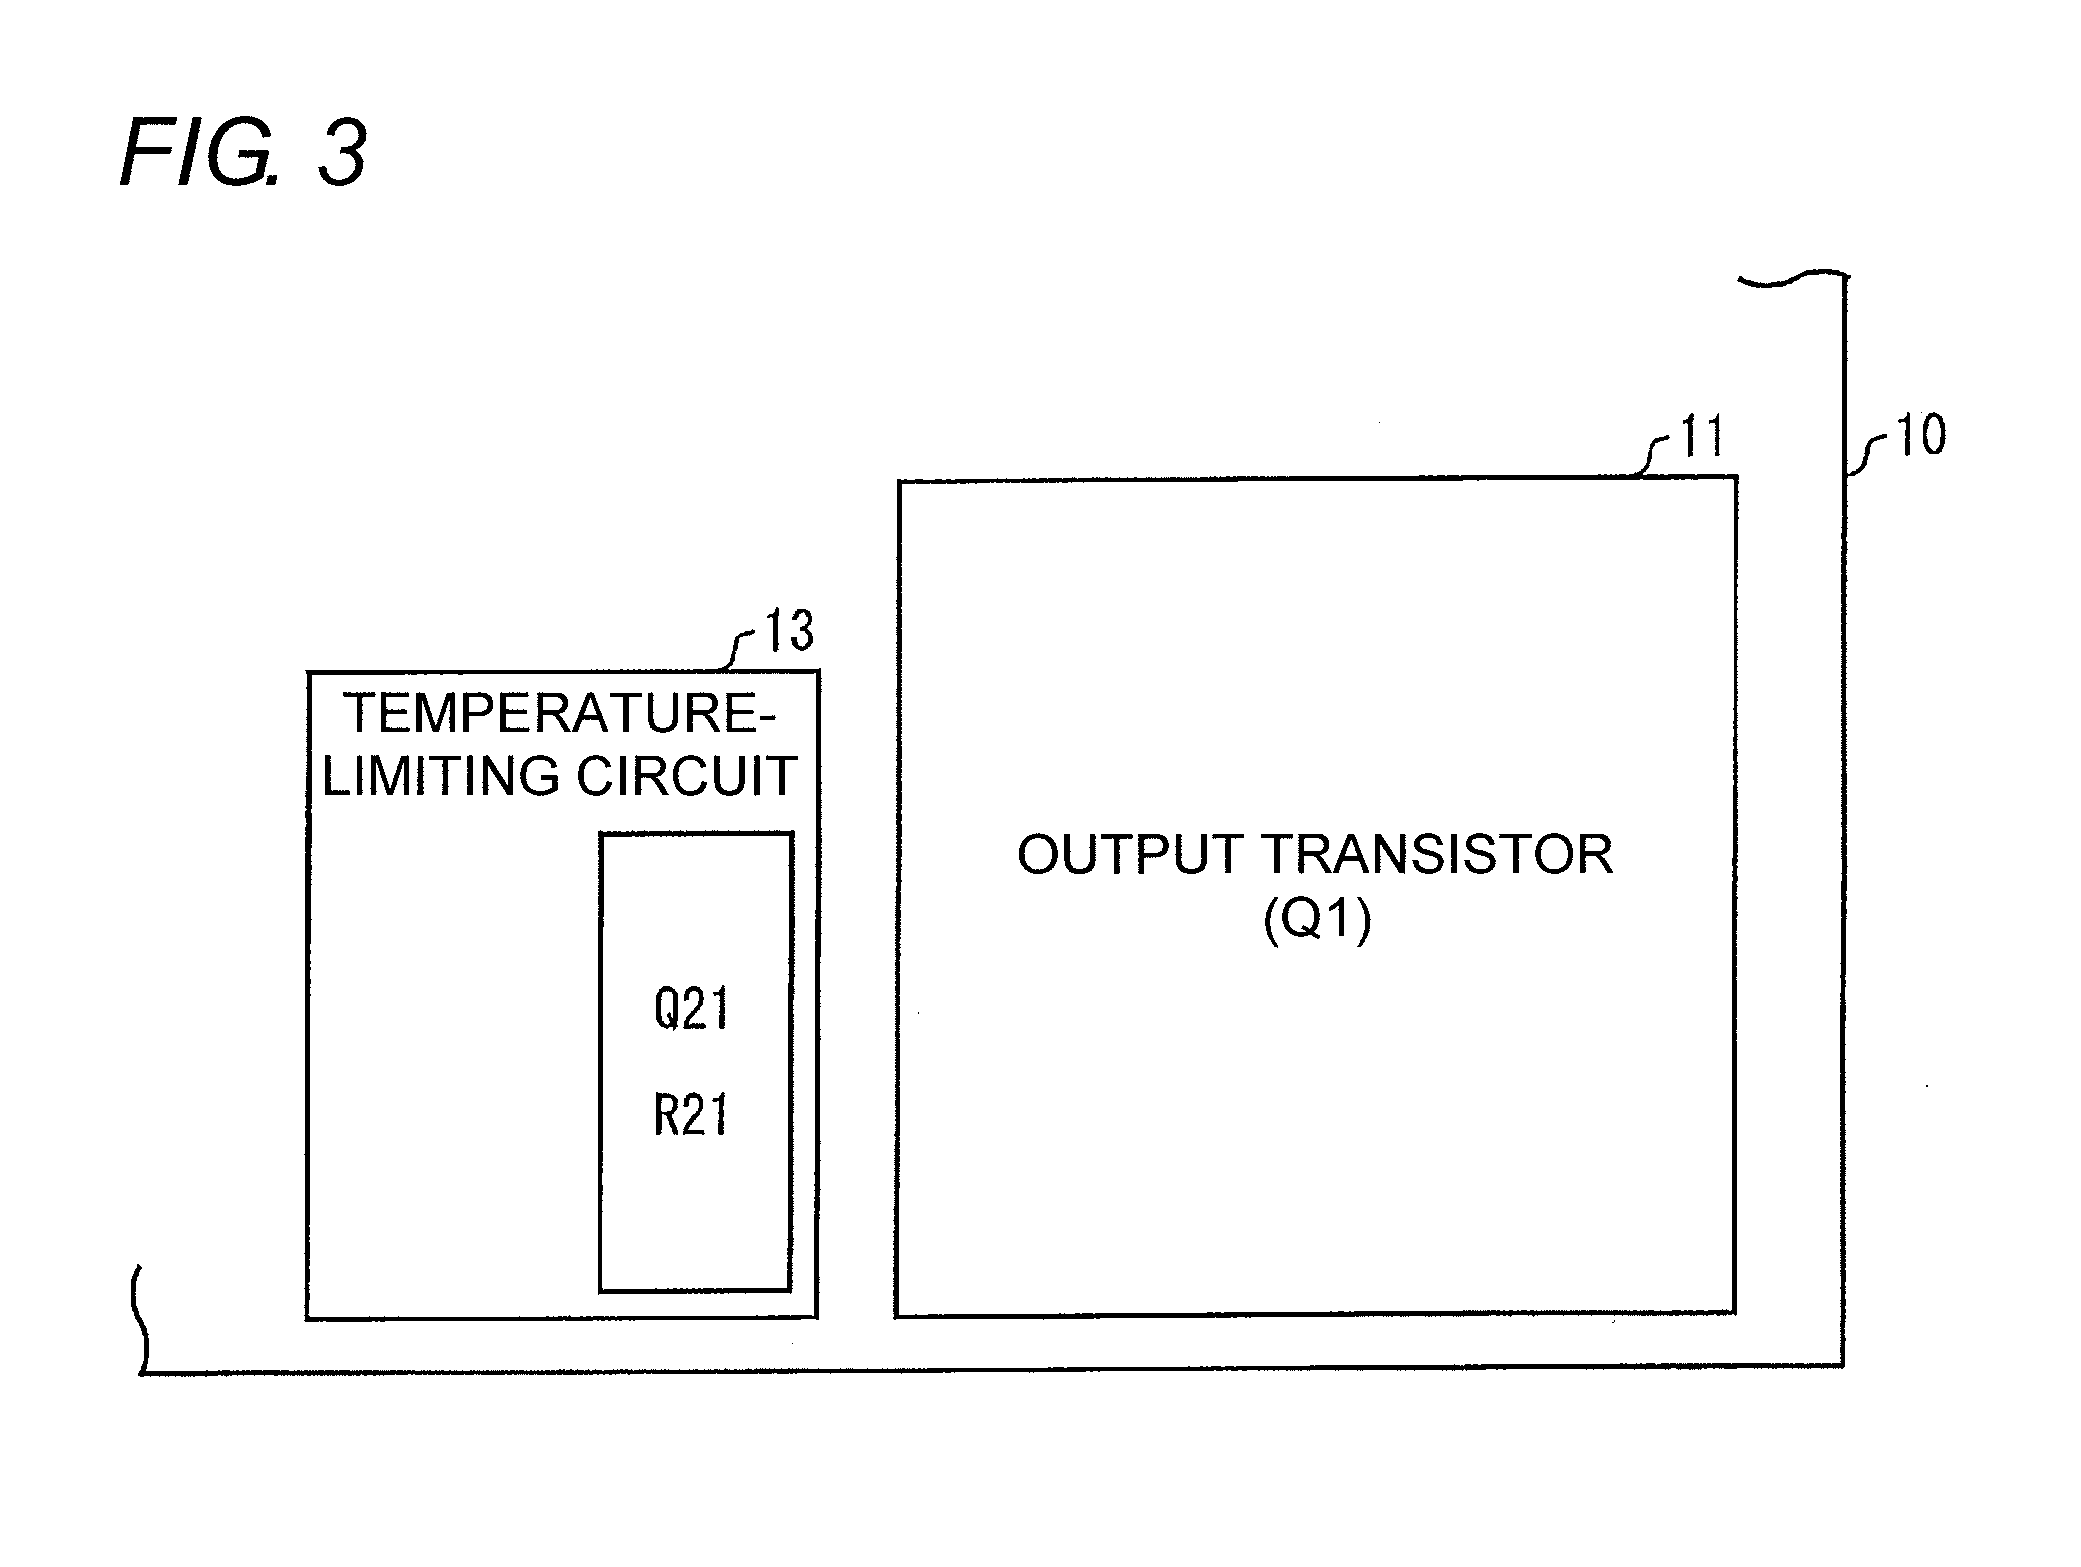 Sensor output IC and sensor device